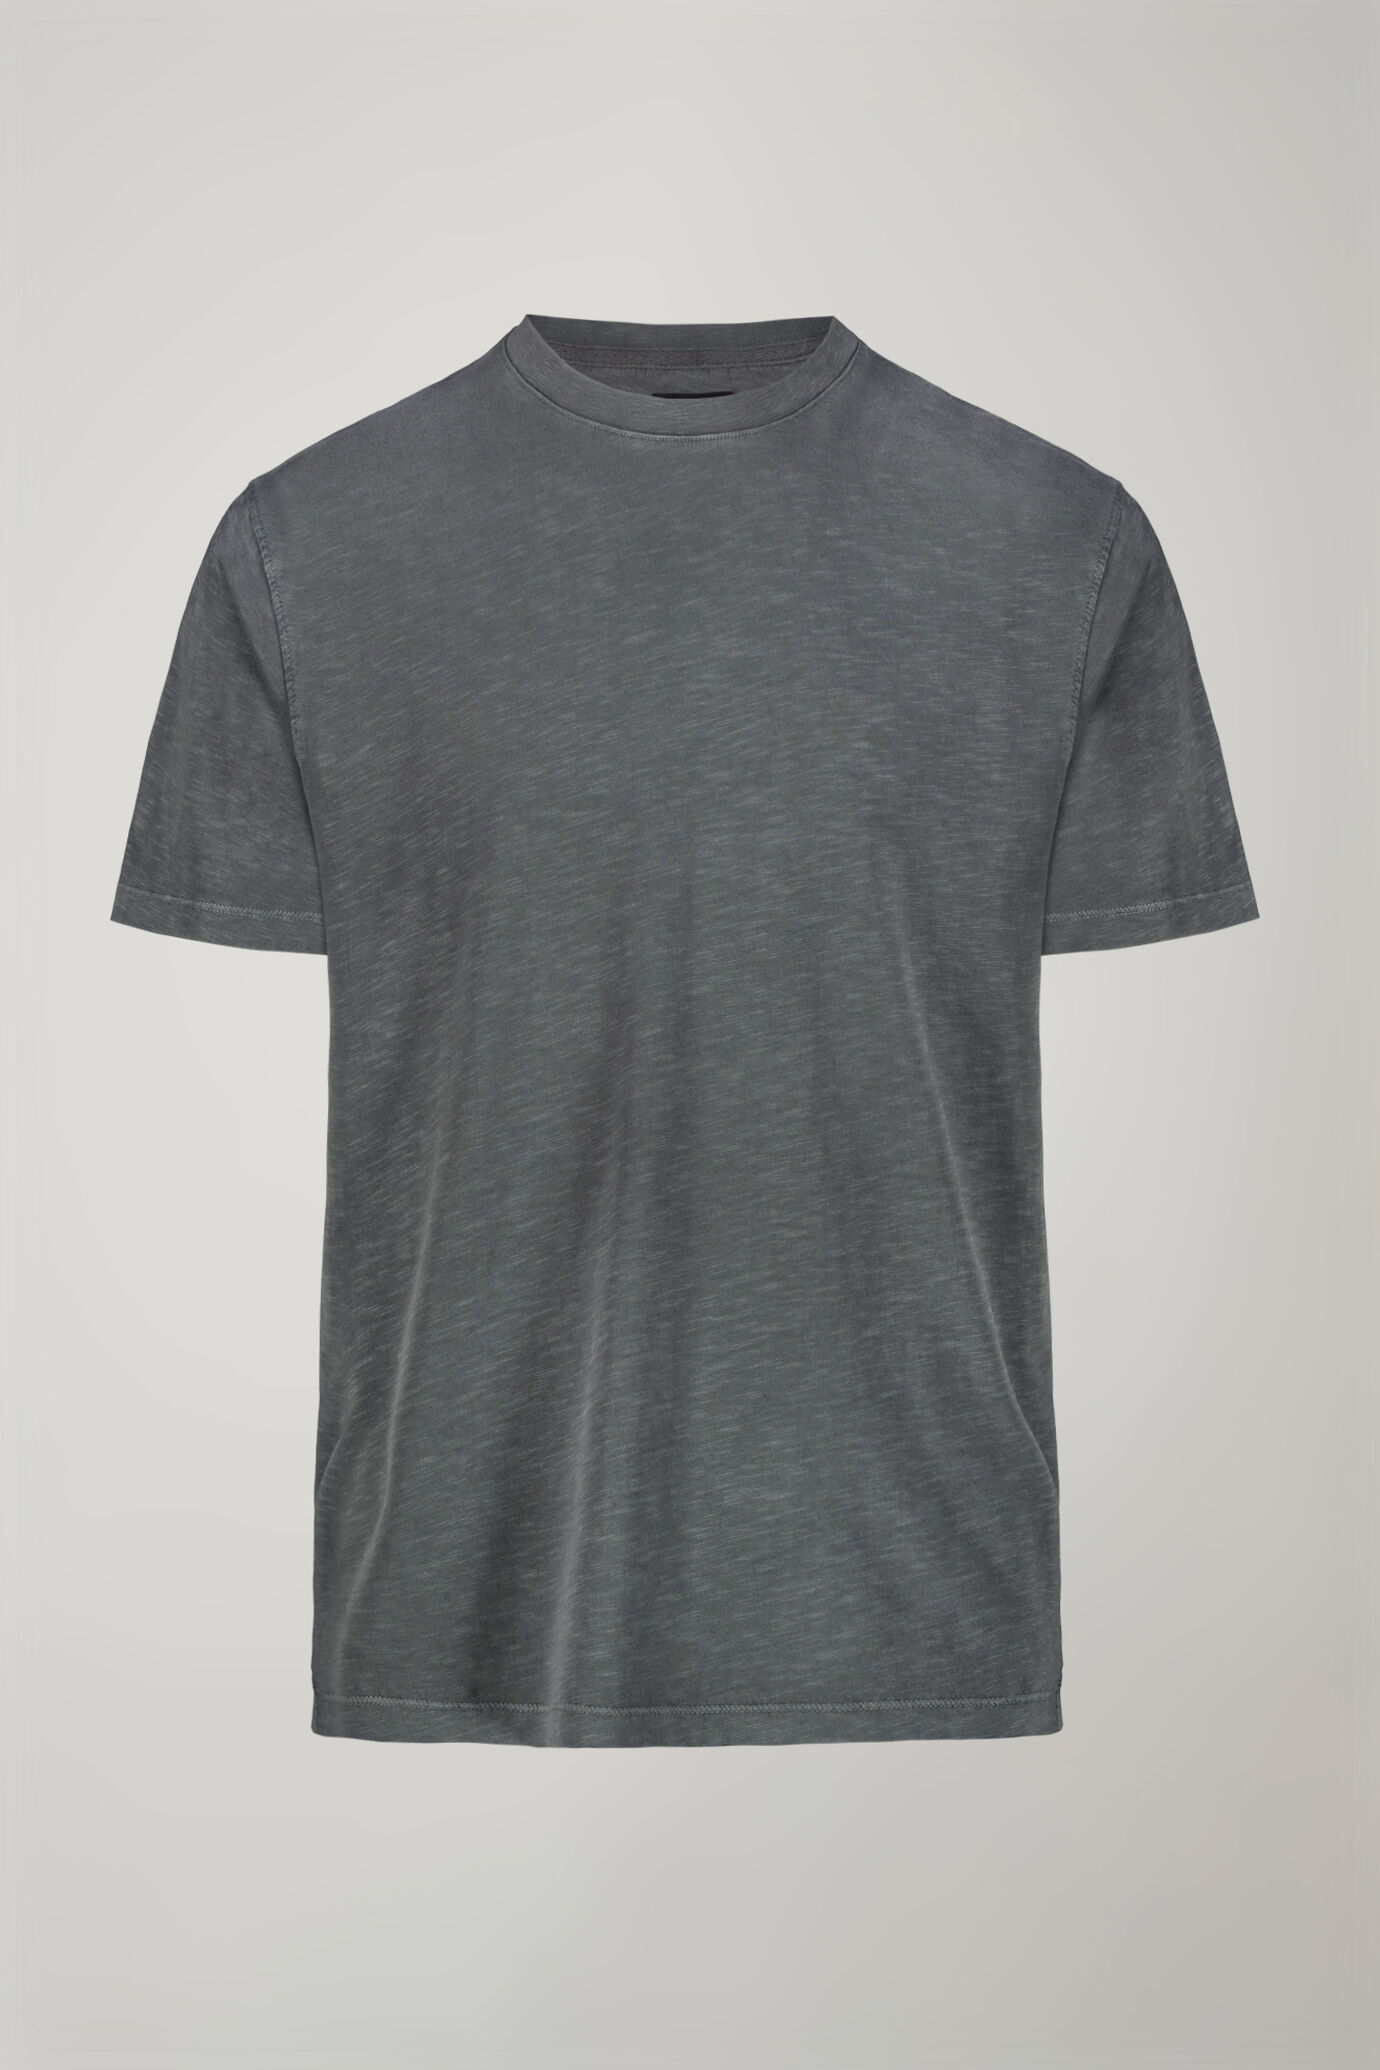 Men’s round neck t-shirt 100% cotton flamed effect regular fit image number 4